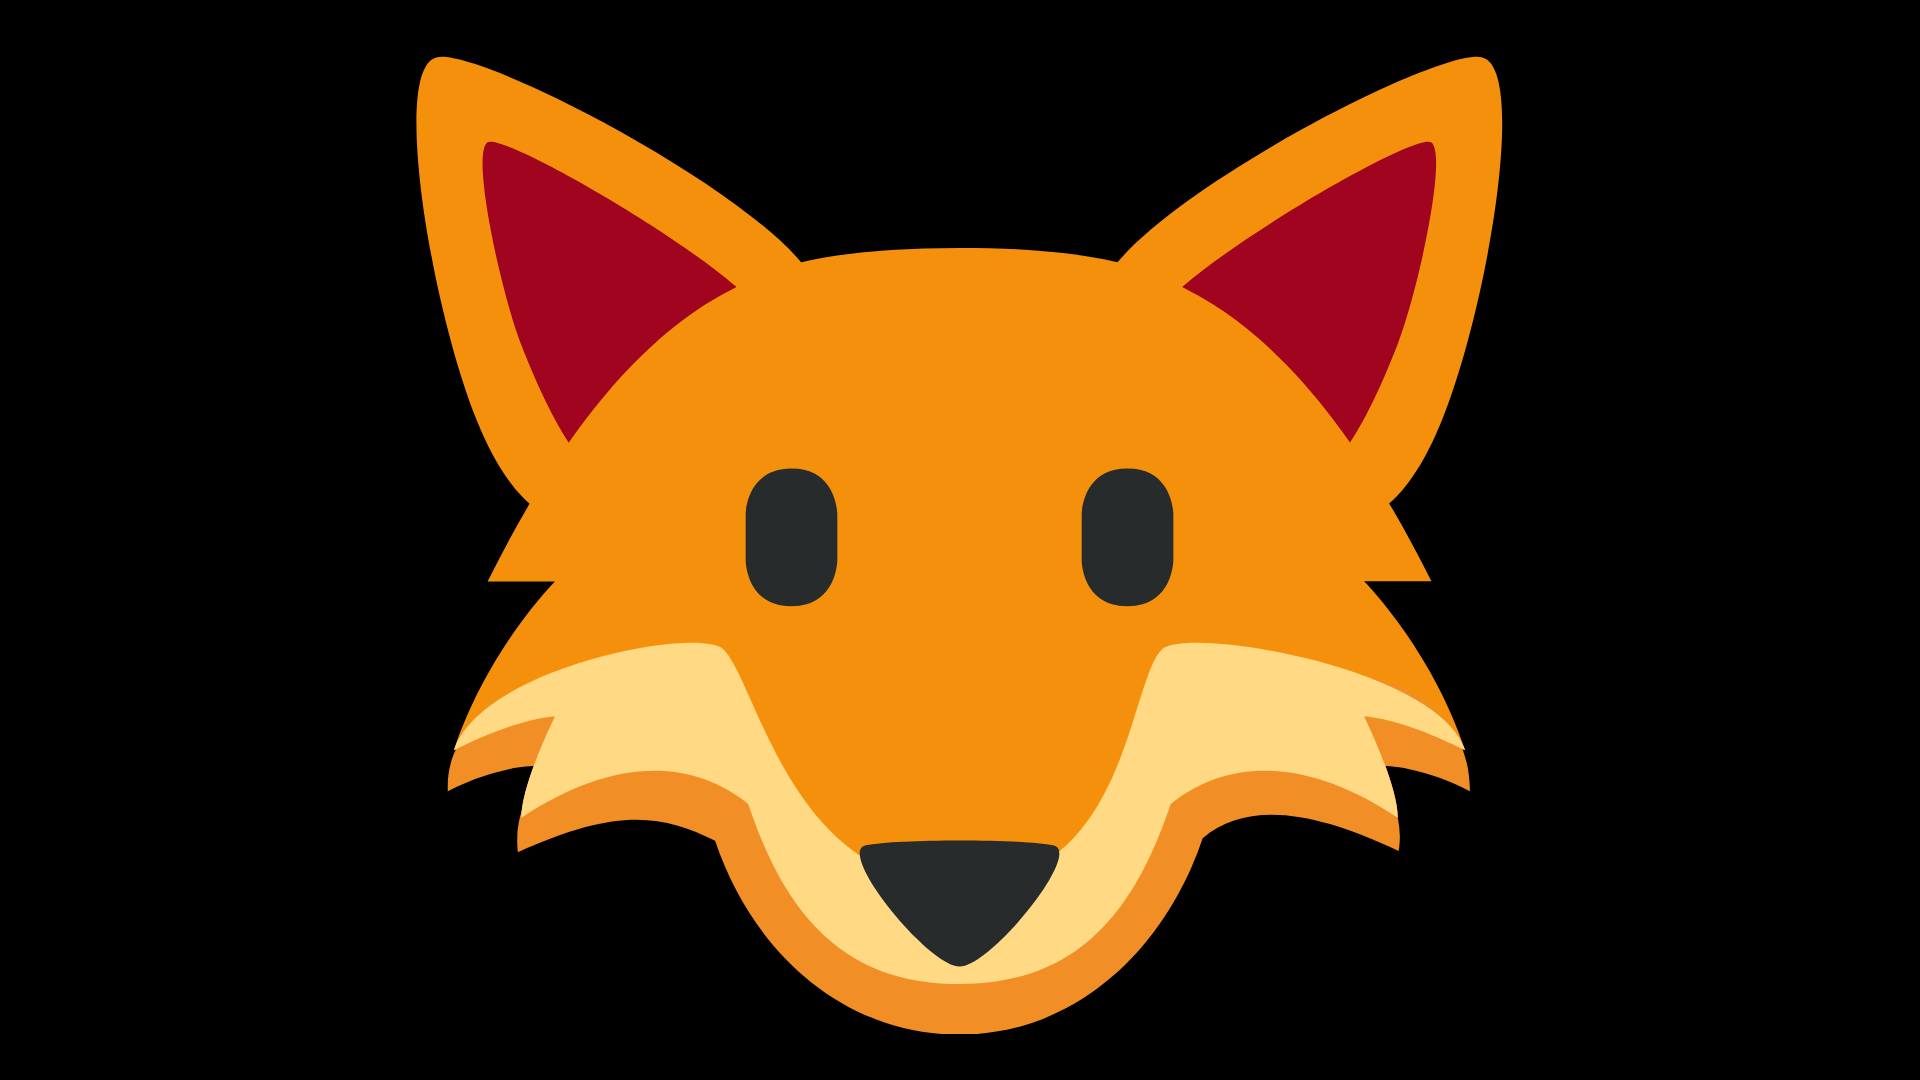 fox flashcard. Black background with orange fox face.